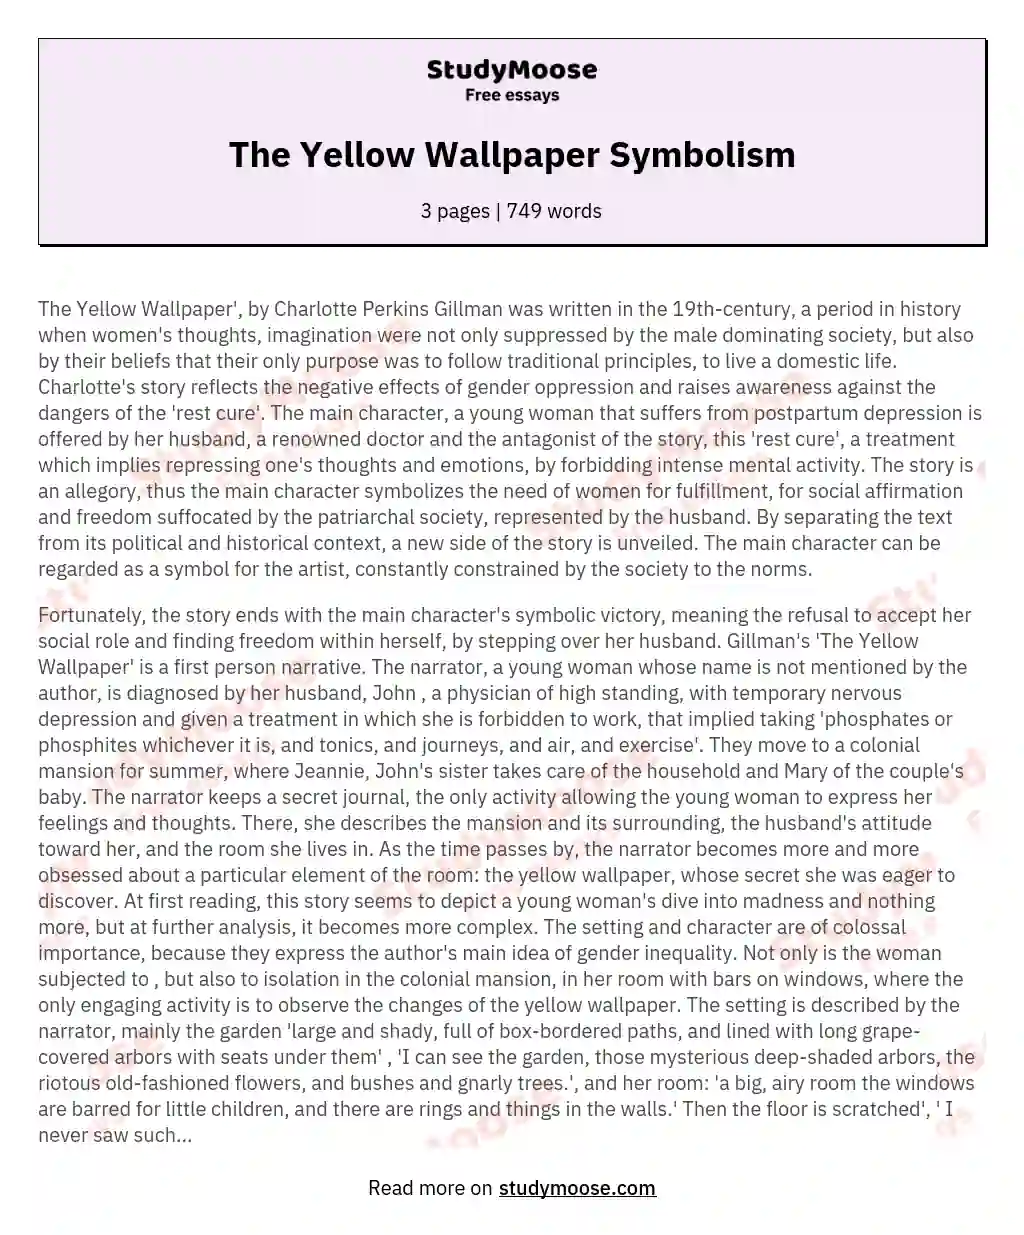 The Yellow Wallpaper Symbolism Essay - Free Essay Example